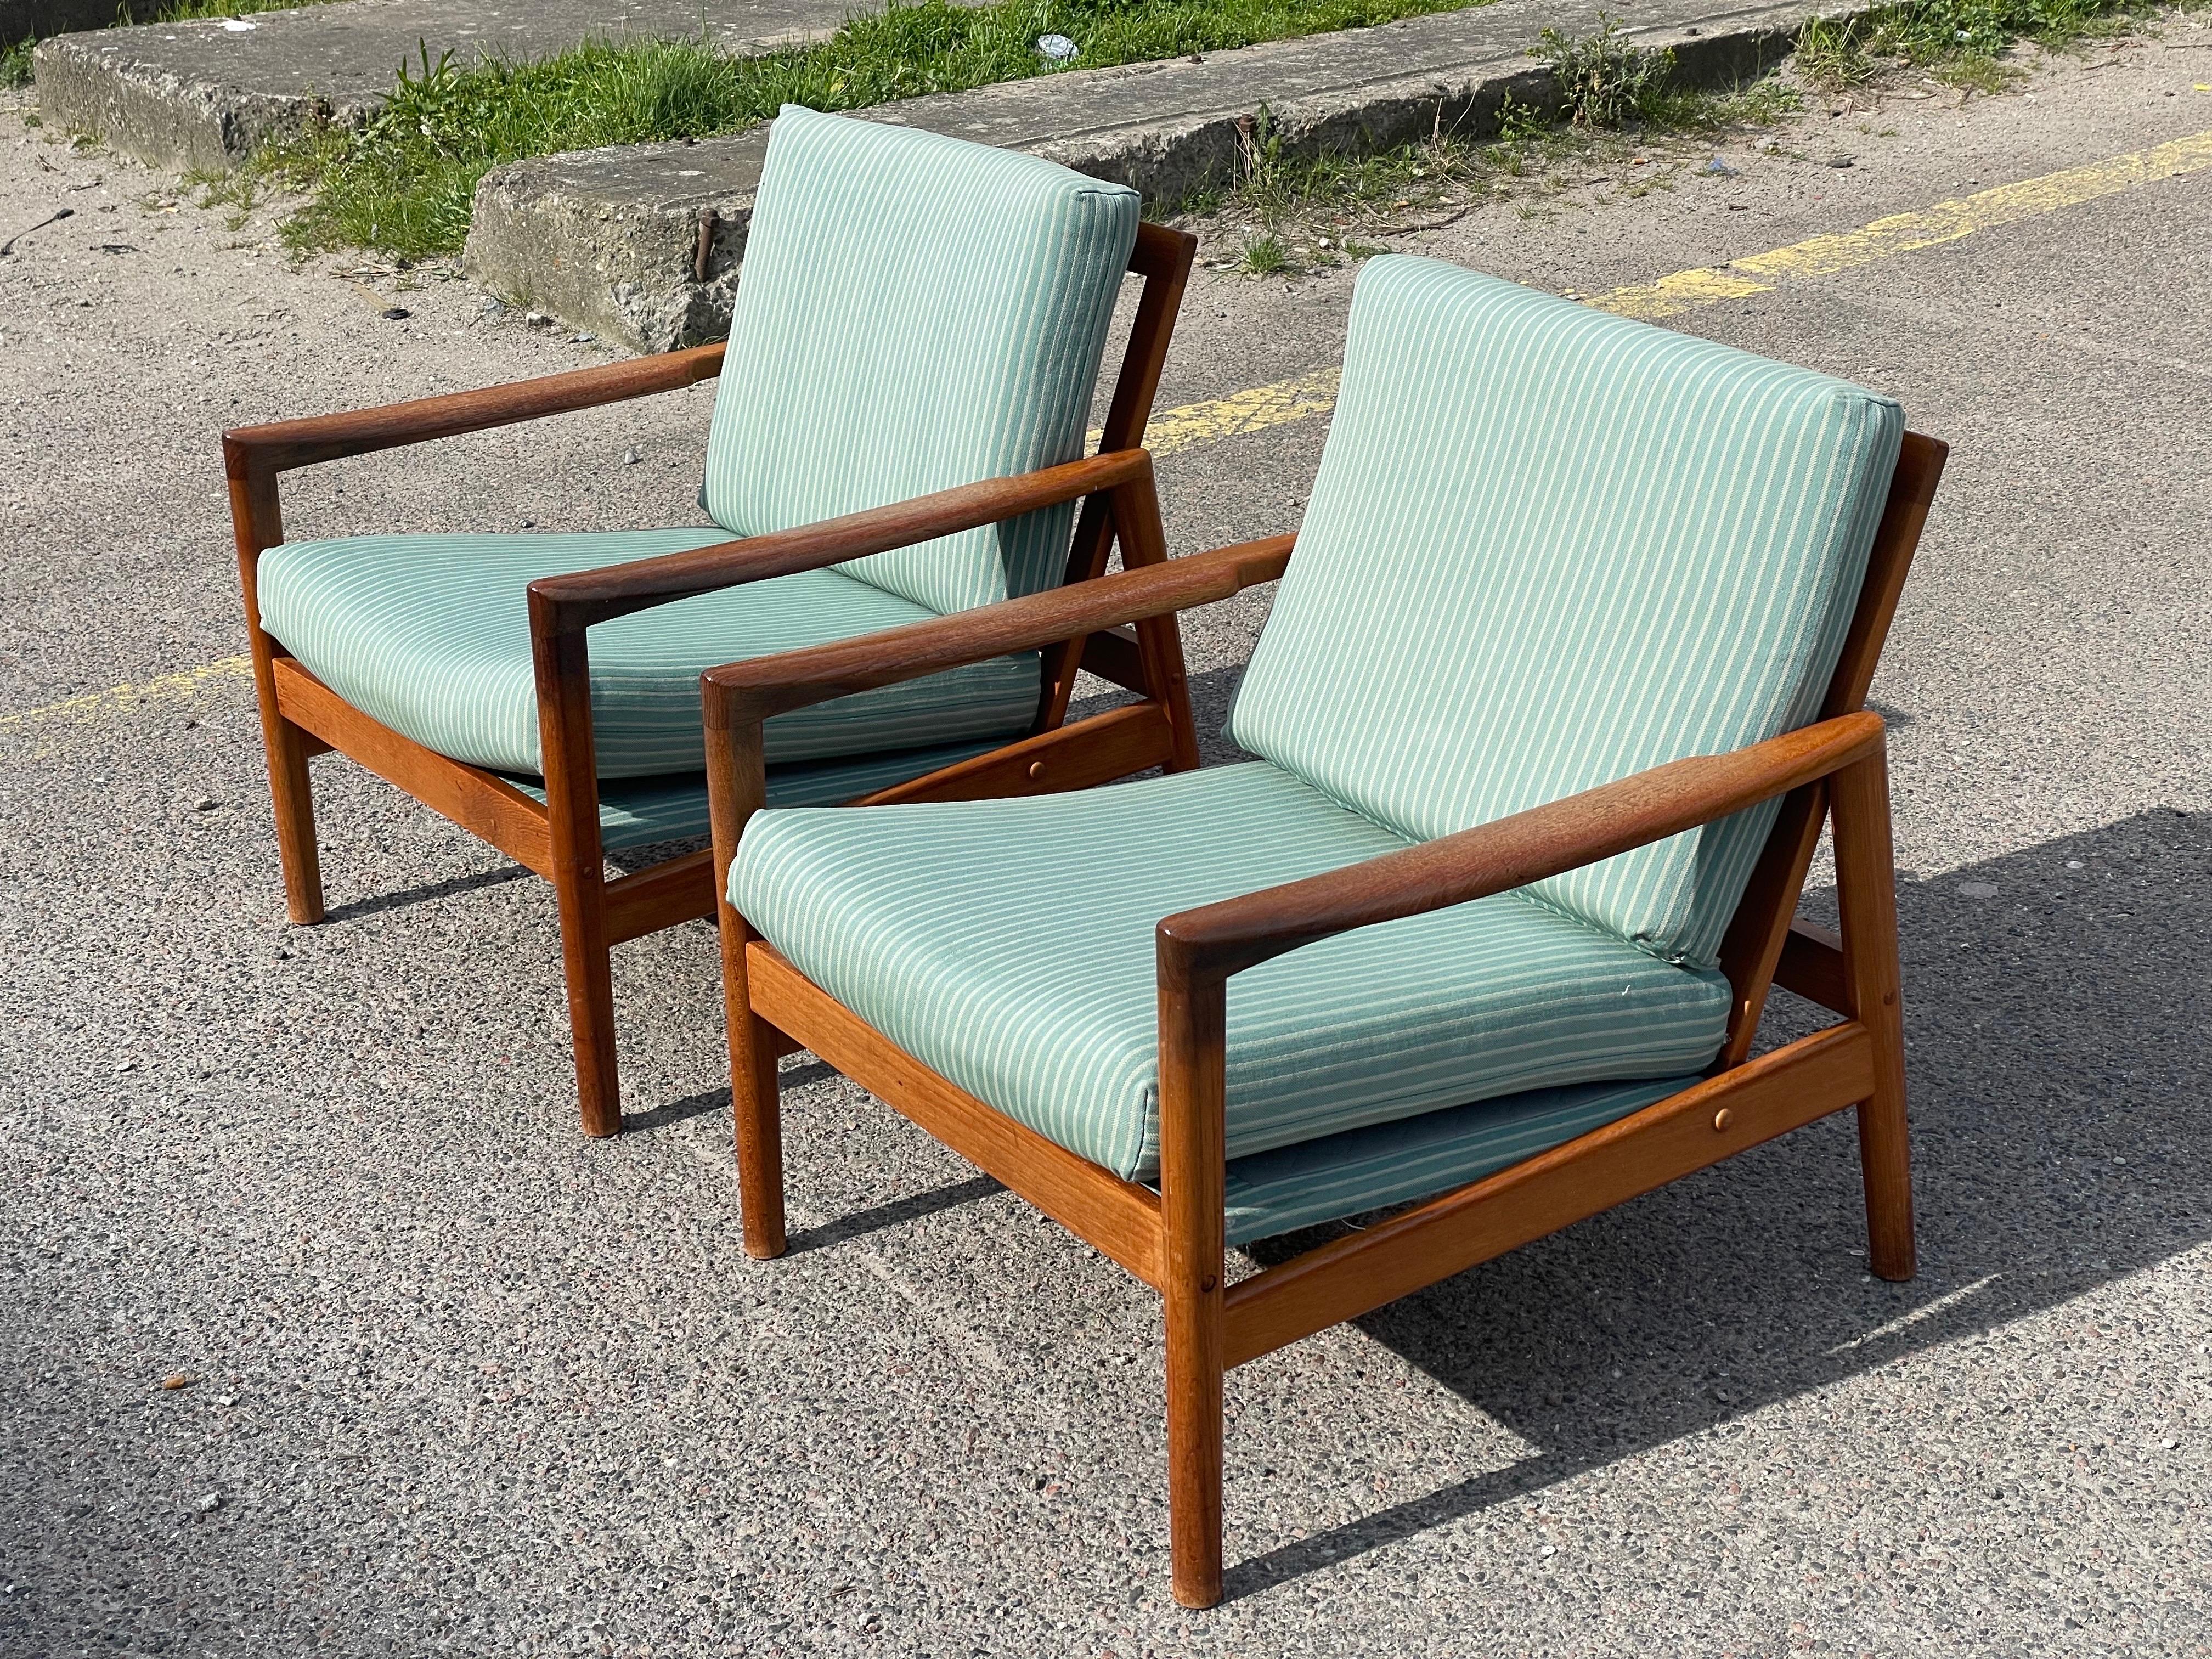 Mid-Century Modern Set of Rare Seen Hans Olsen Teak Chairs by Juul Kristensen from the 1960s For Sale